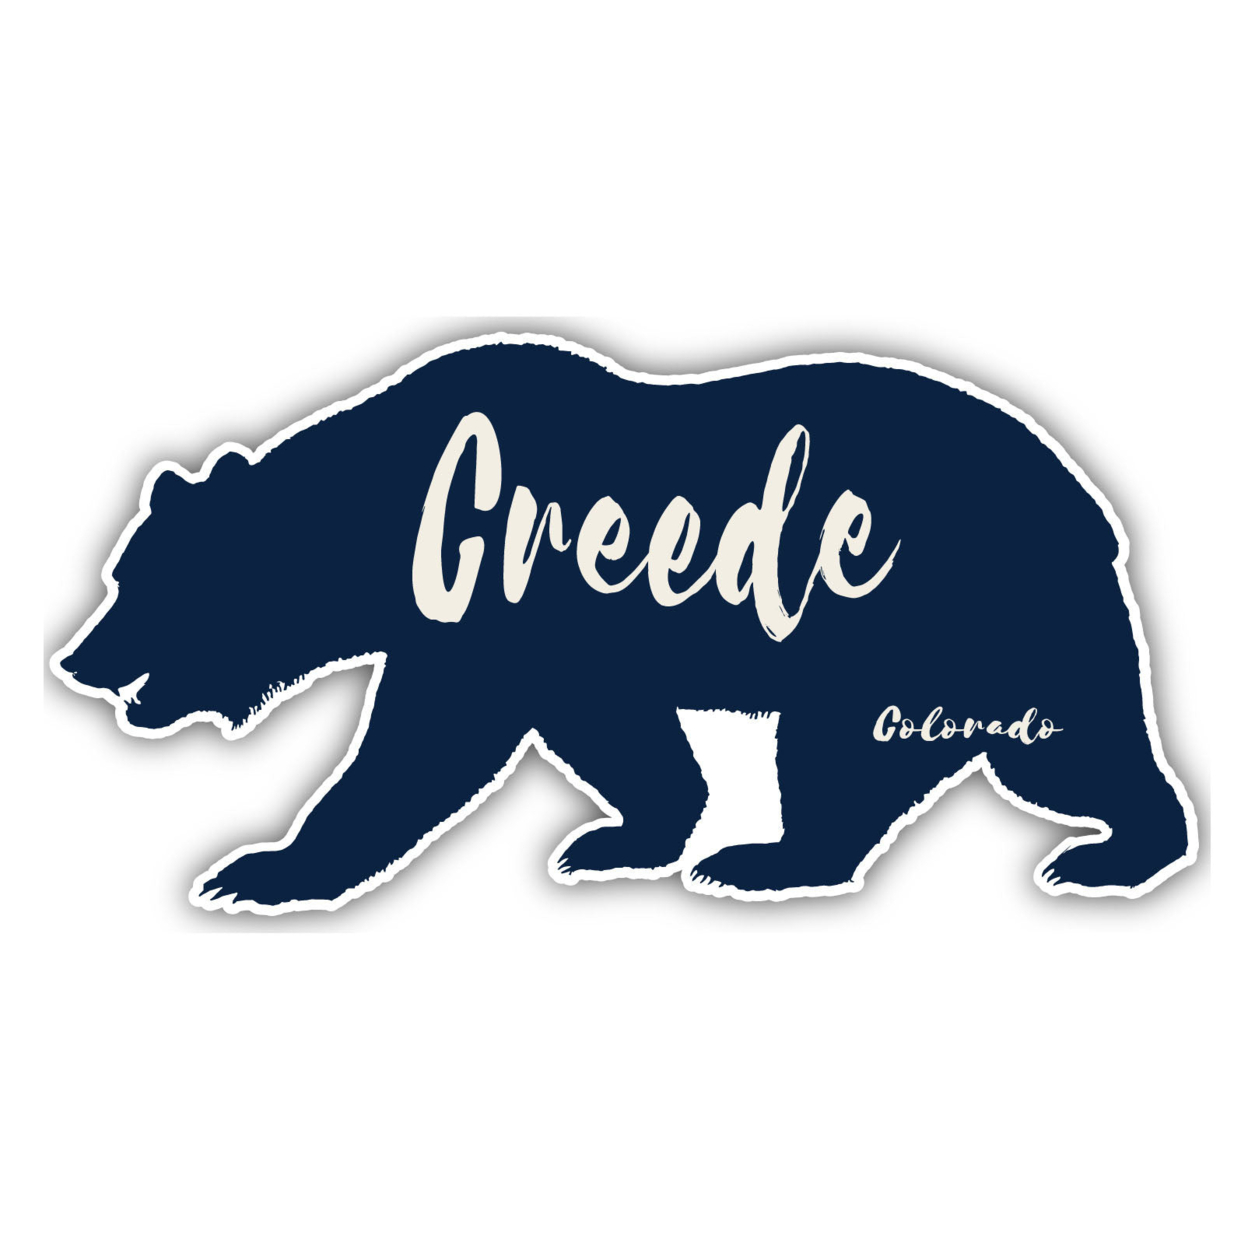 Creede Colorado Souvenir Decorative Stickers (Choose Theme And Size) - Single Unit, 8-Inch, Bear